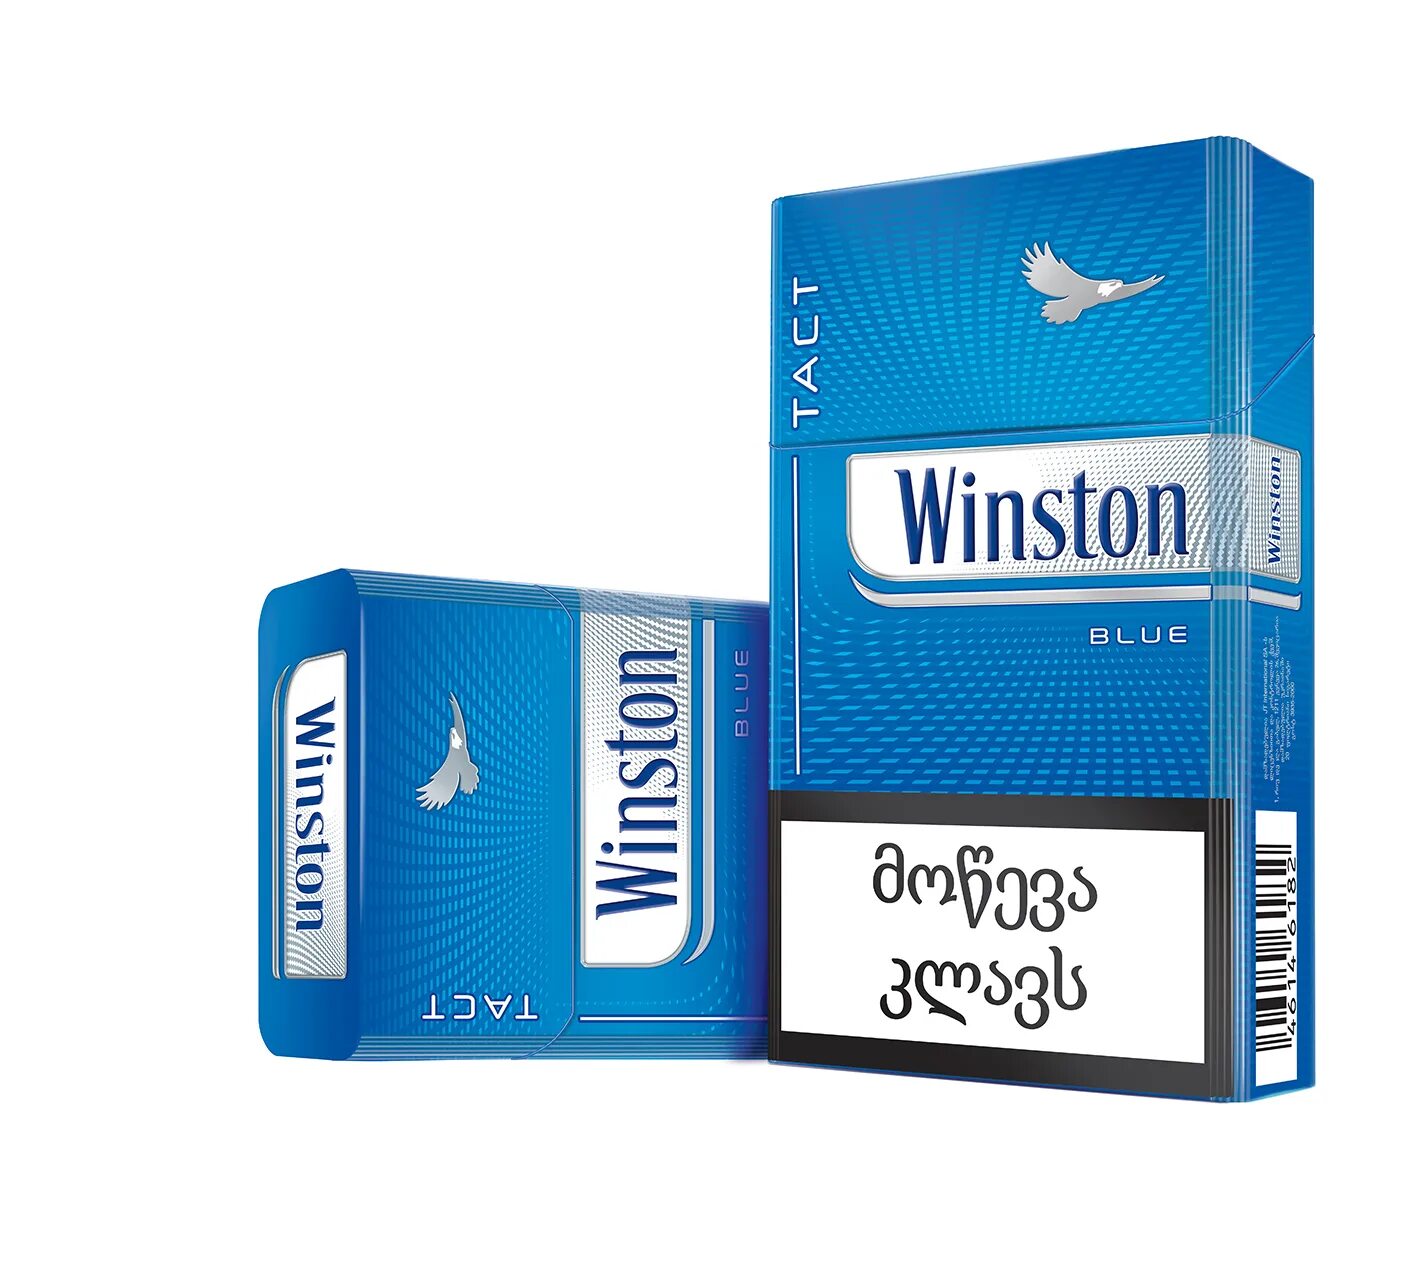 Винстон компакт Блю. Winston XS Compact. Винстон синий компакт 100. Сигареты Винстон тонкие синие.